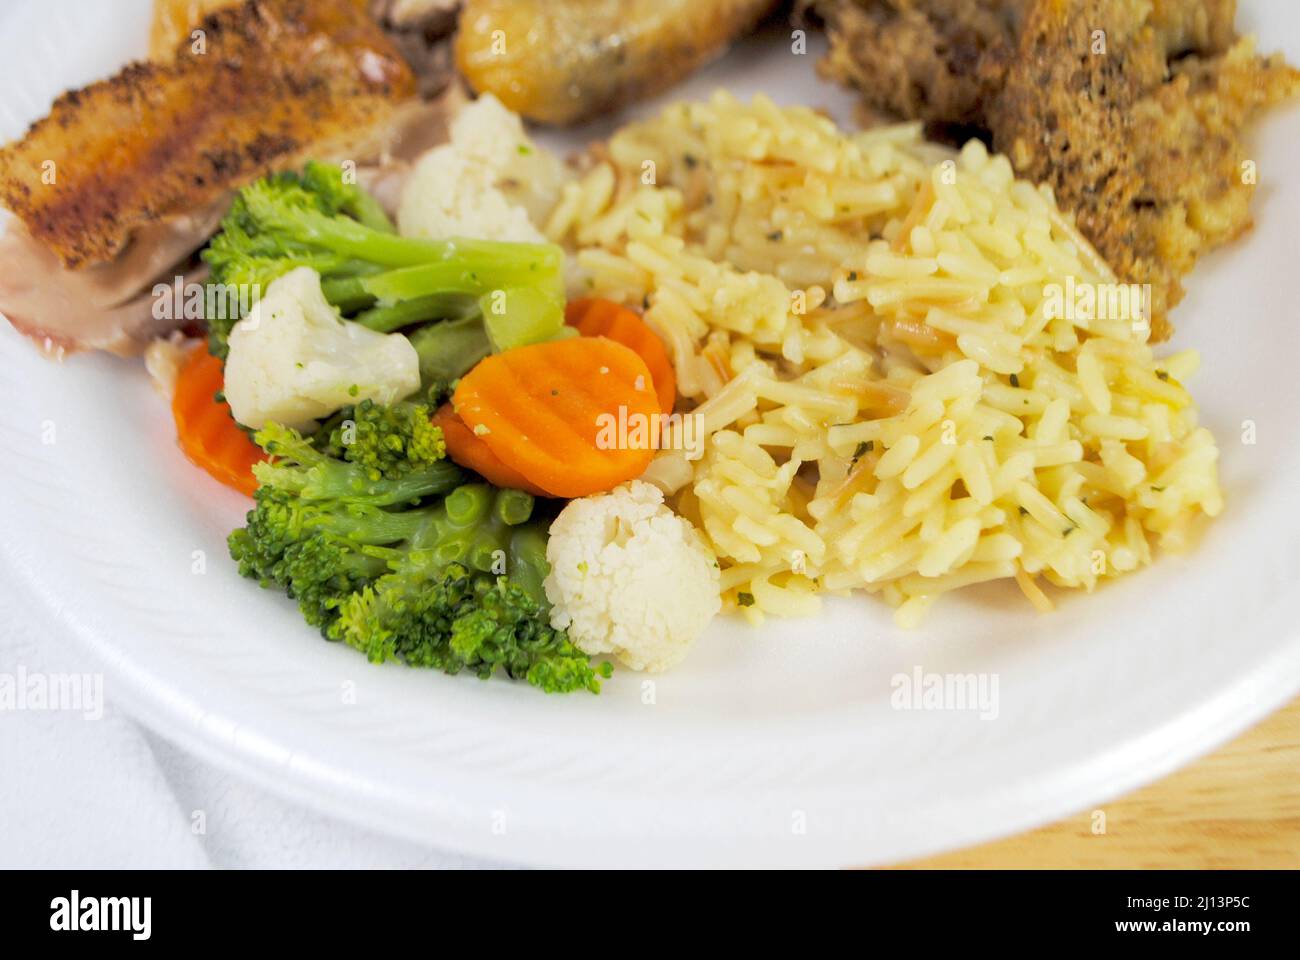 Mixed Veggies of Broccoli, Cauliflower, and Carrots Stock Photo